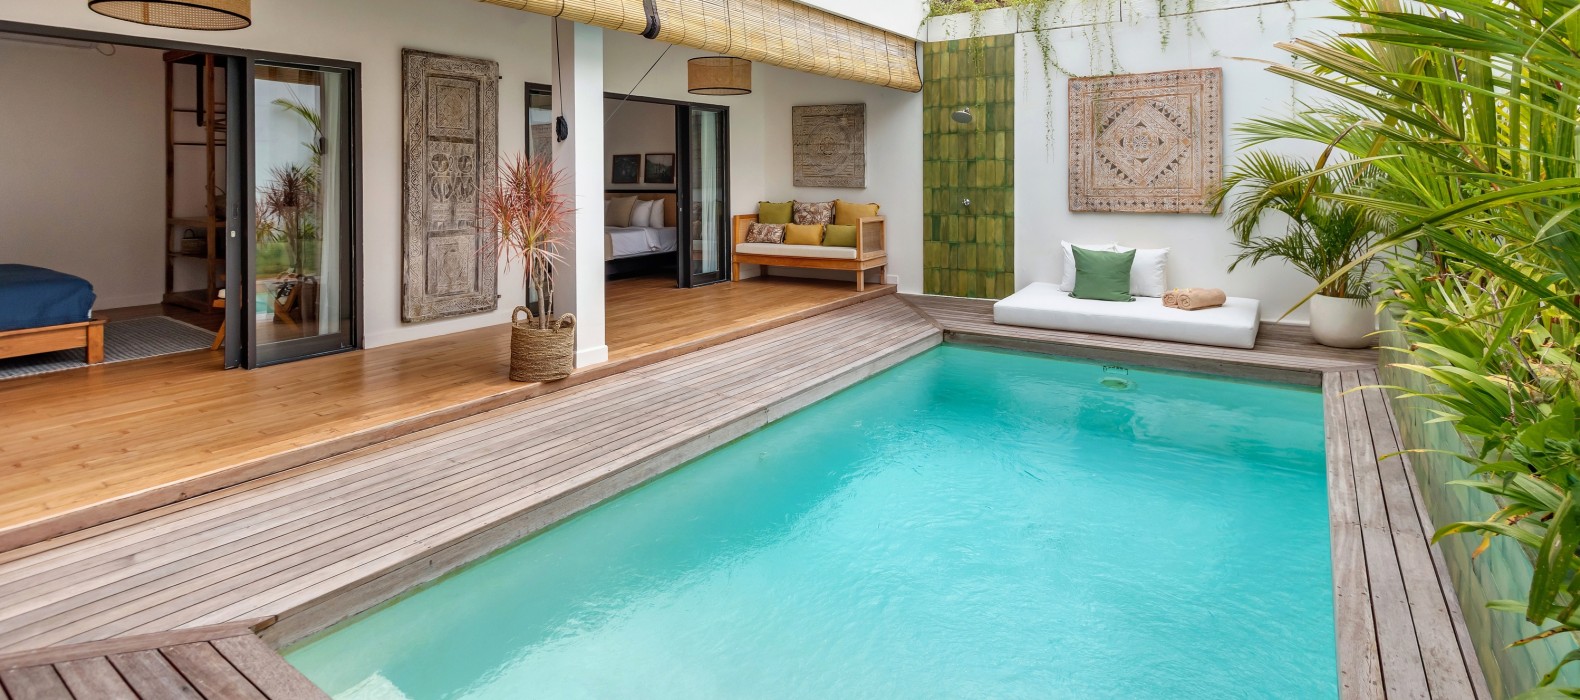 Exterior pool view of Villa Greco in Bali